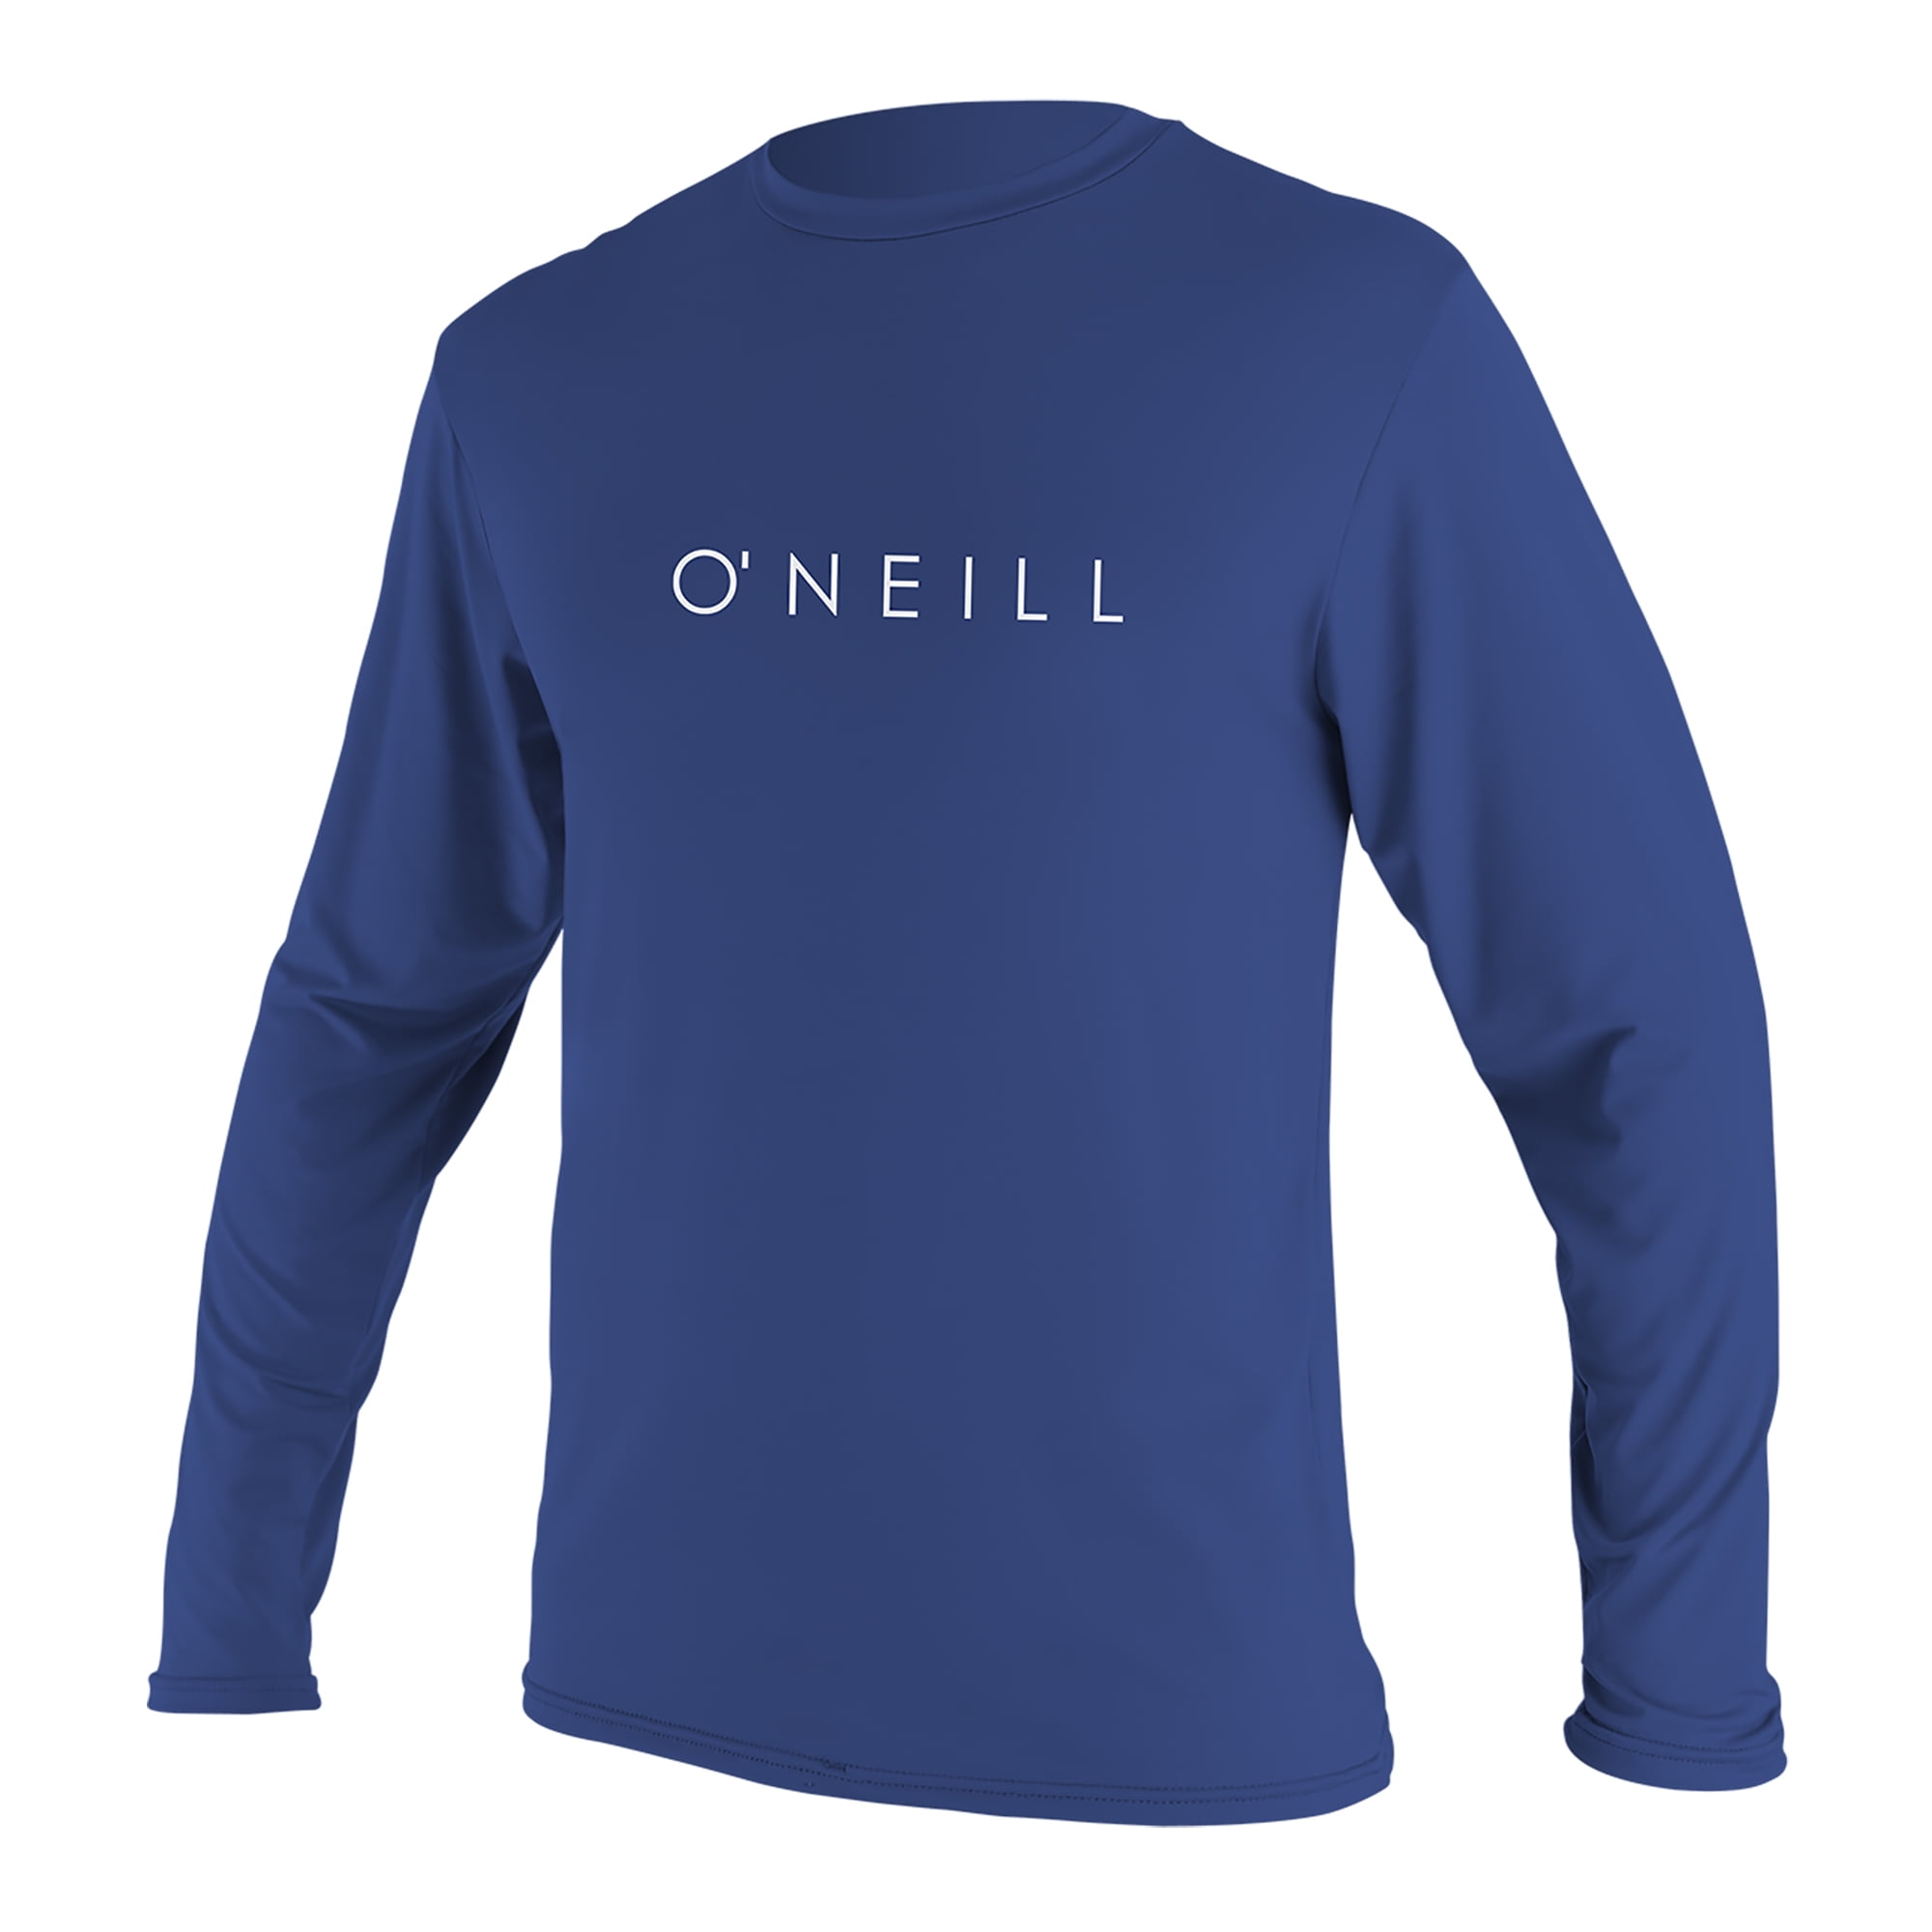 Marca ONEILLO'NEILL Youth Basic Skins Long Sleeve Sun Shirt Camicia Bambini e Ragazzi 